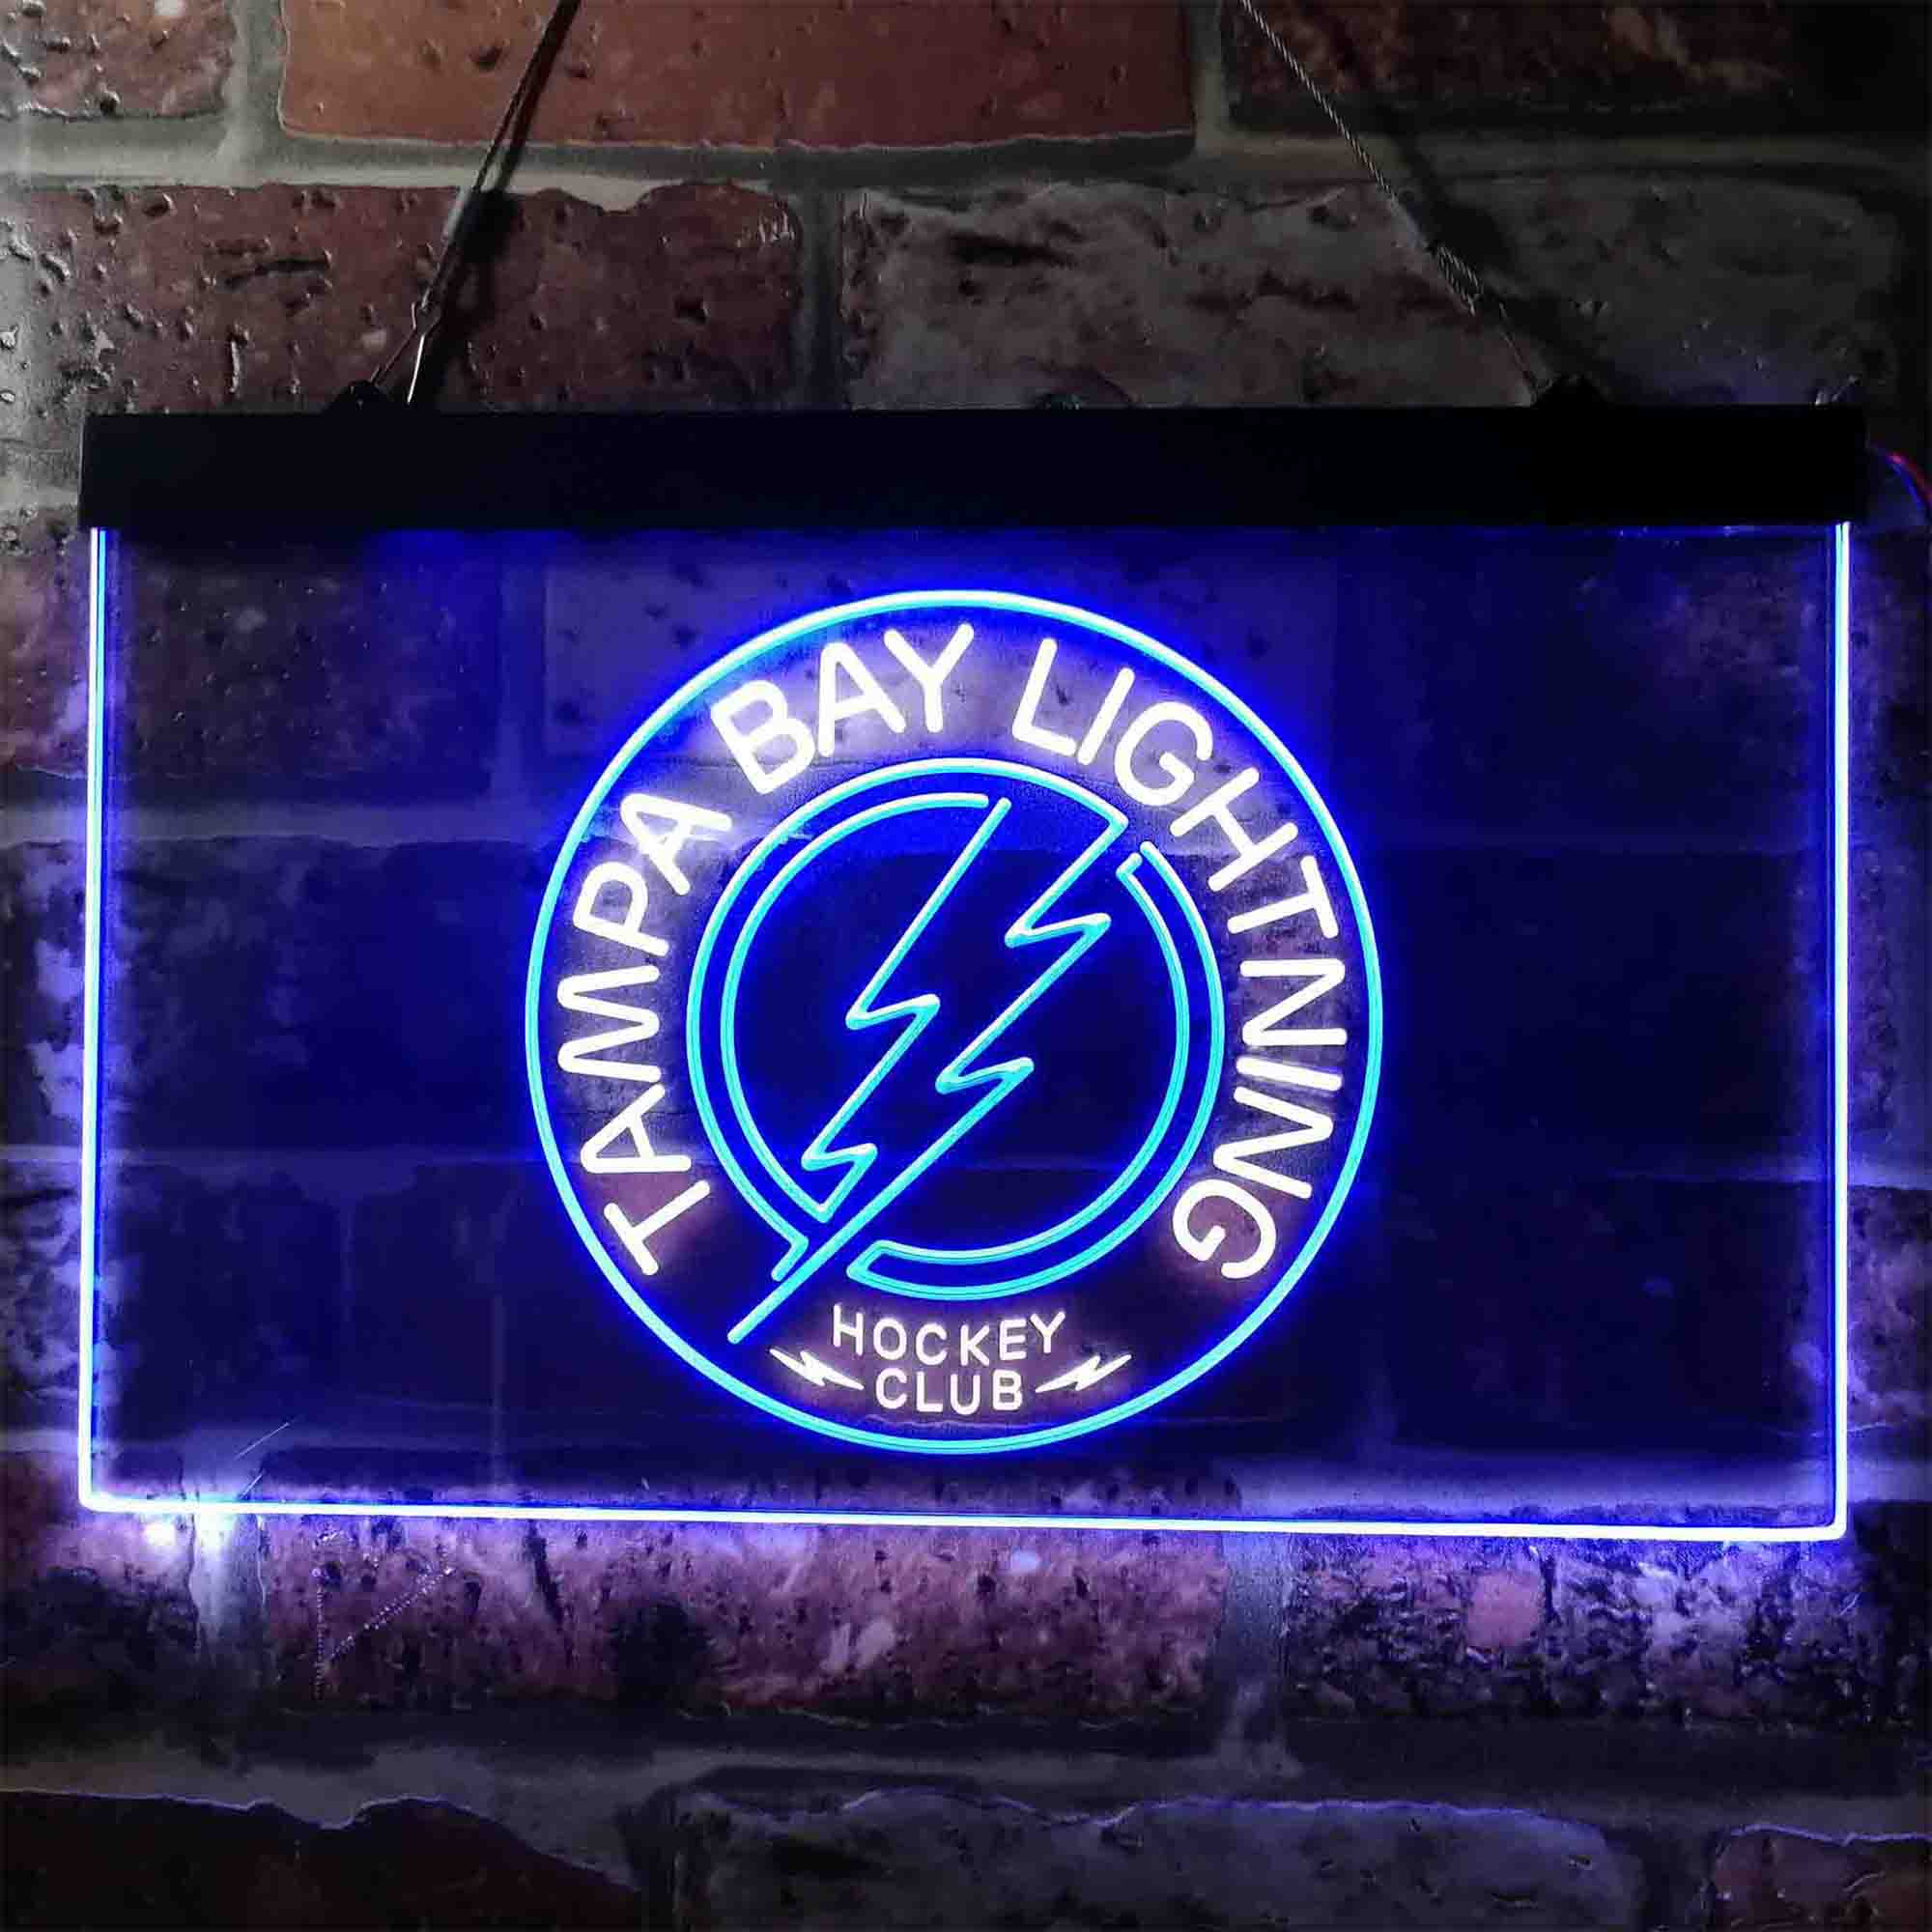 Tampas Bays Lightnings LED Neon Sign